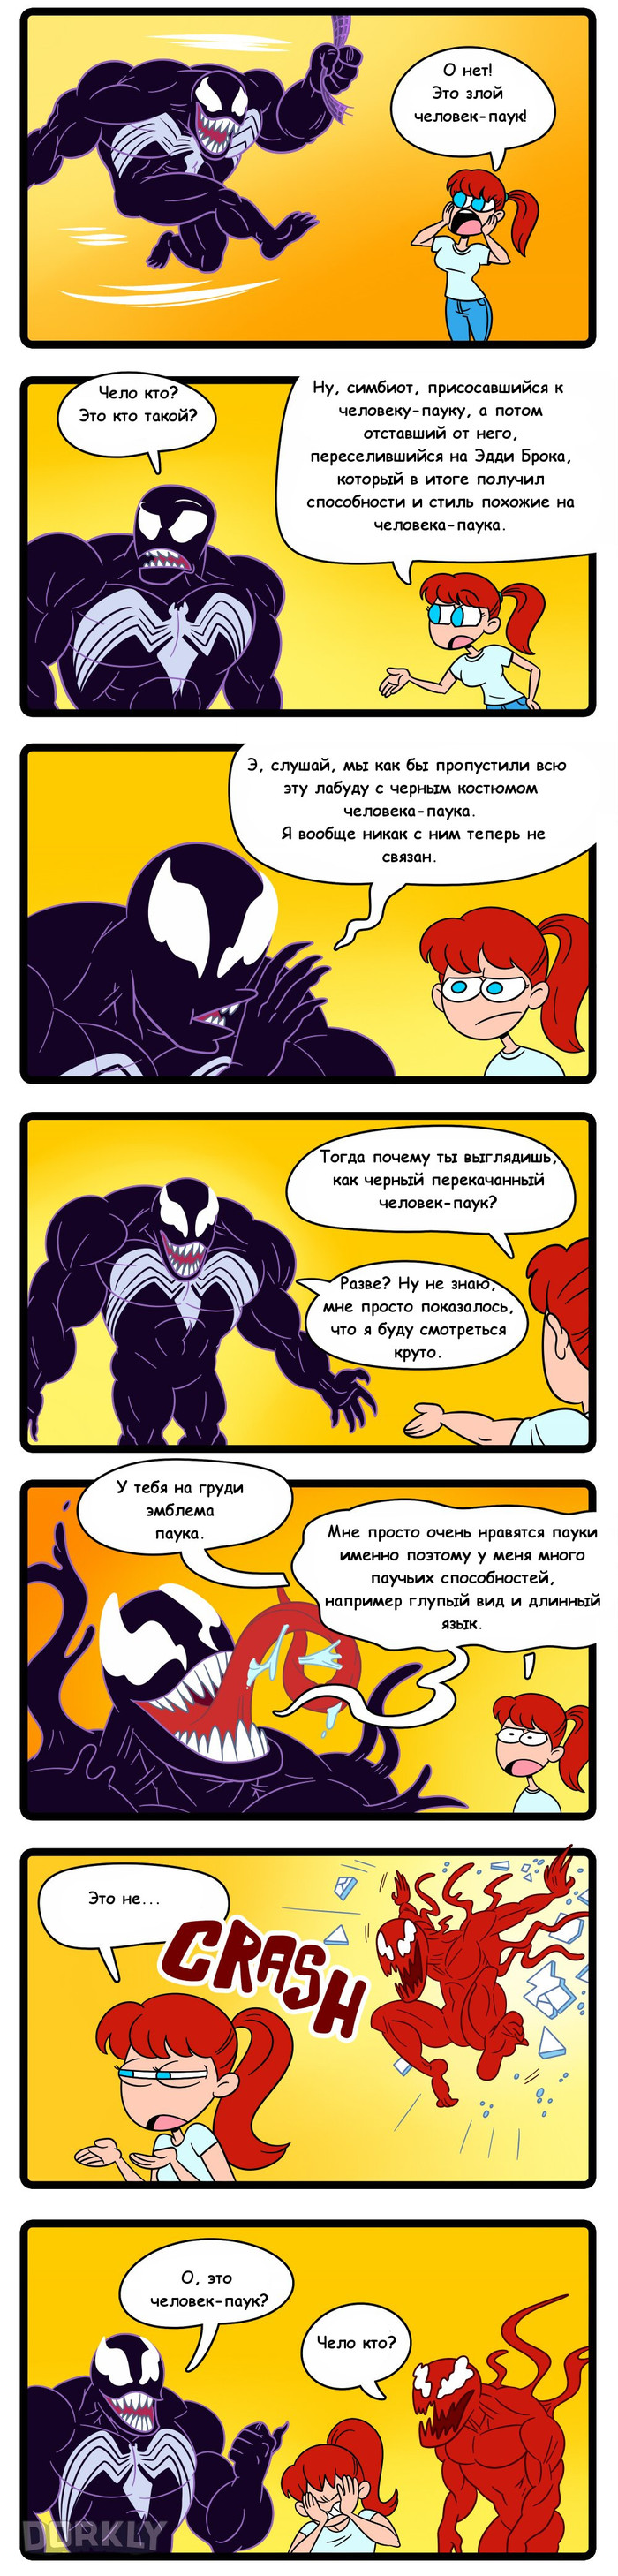 Problems with the solo movie about Venom. - Translation, Comics, Web comic, Dorkly, Venom, Spiderman, Movies, Longpost, My